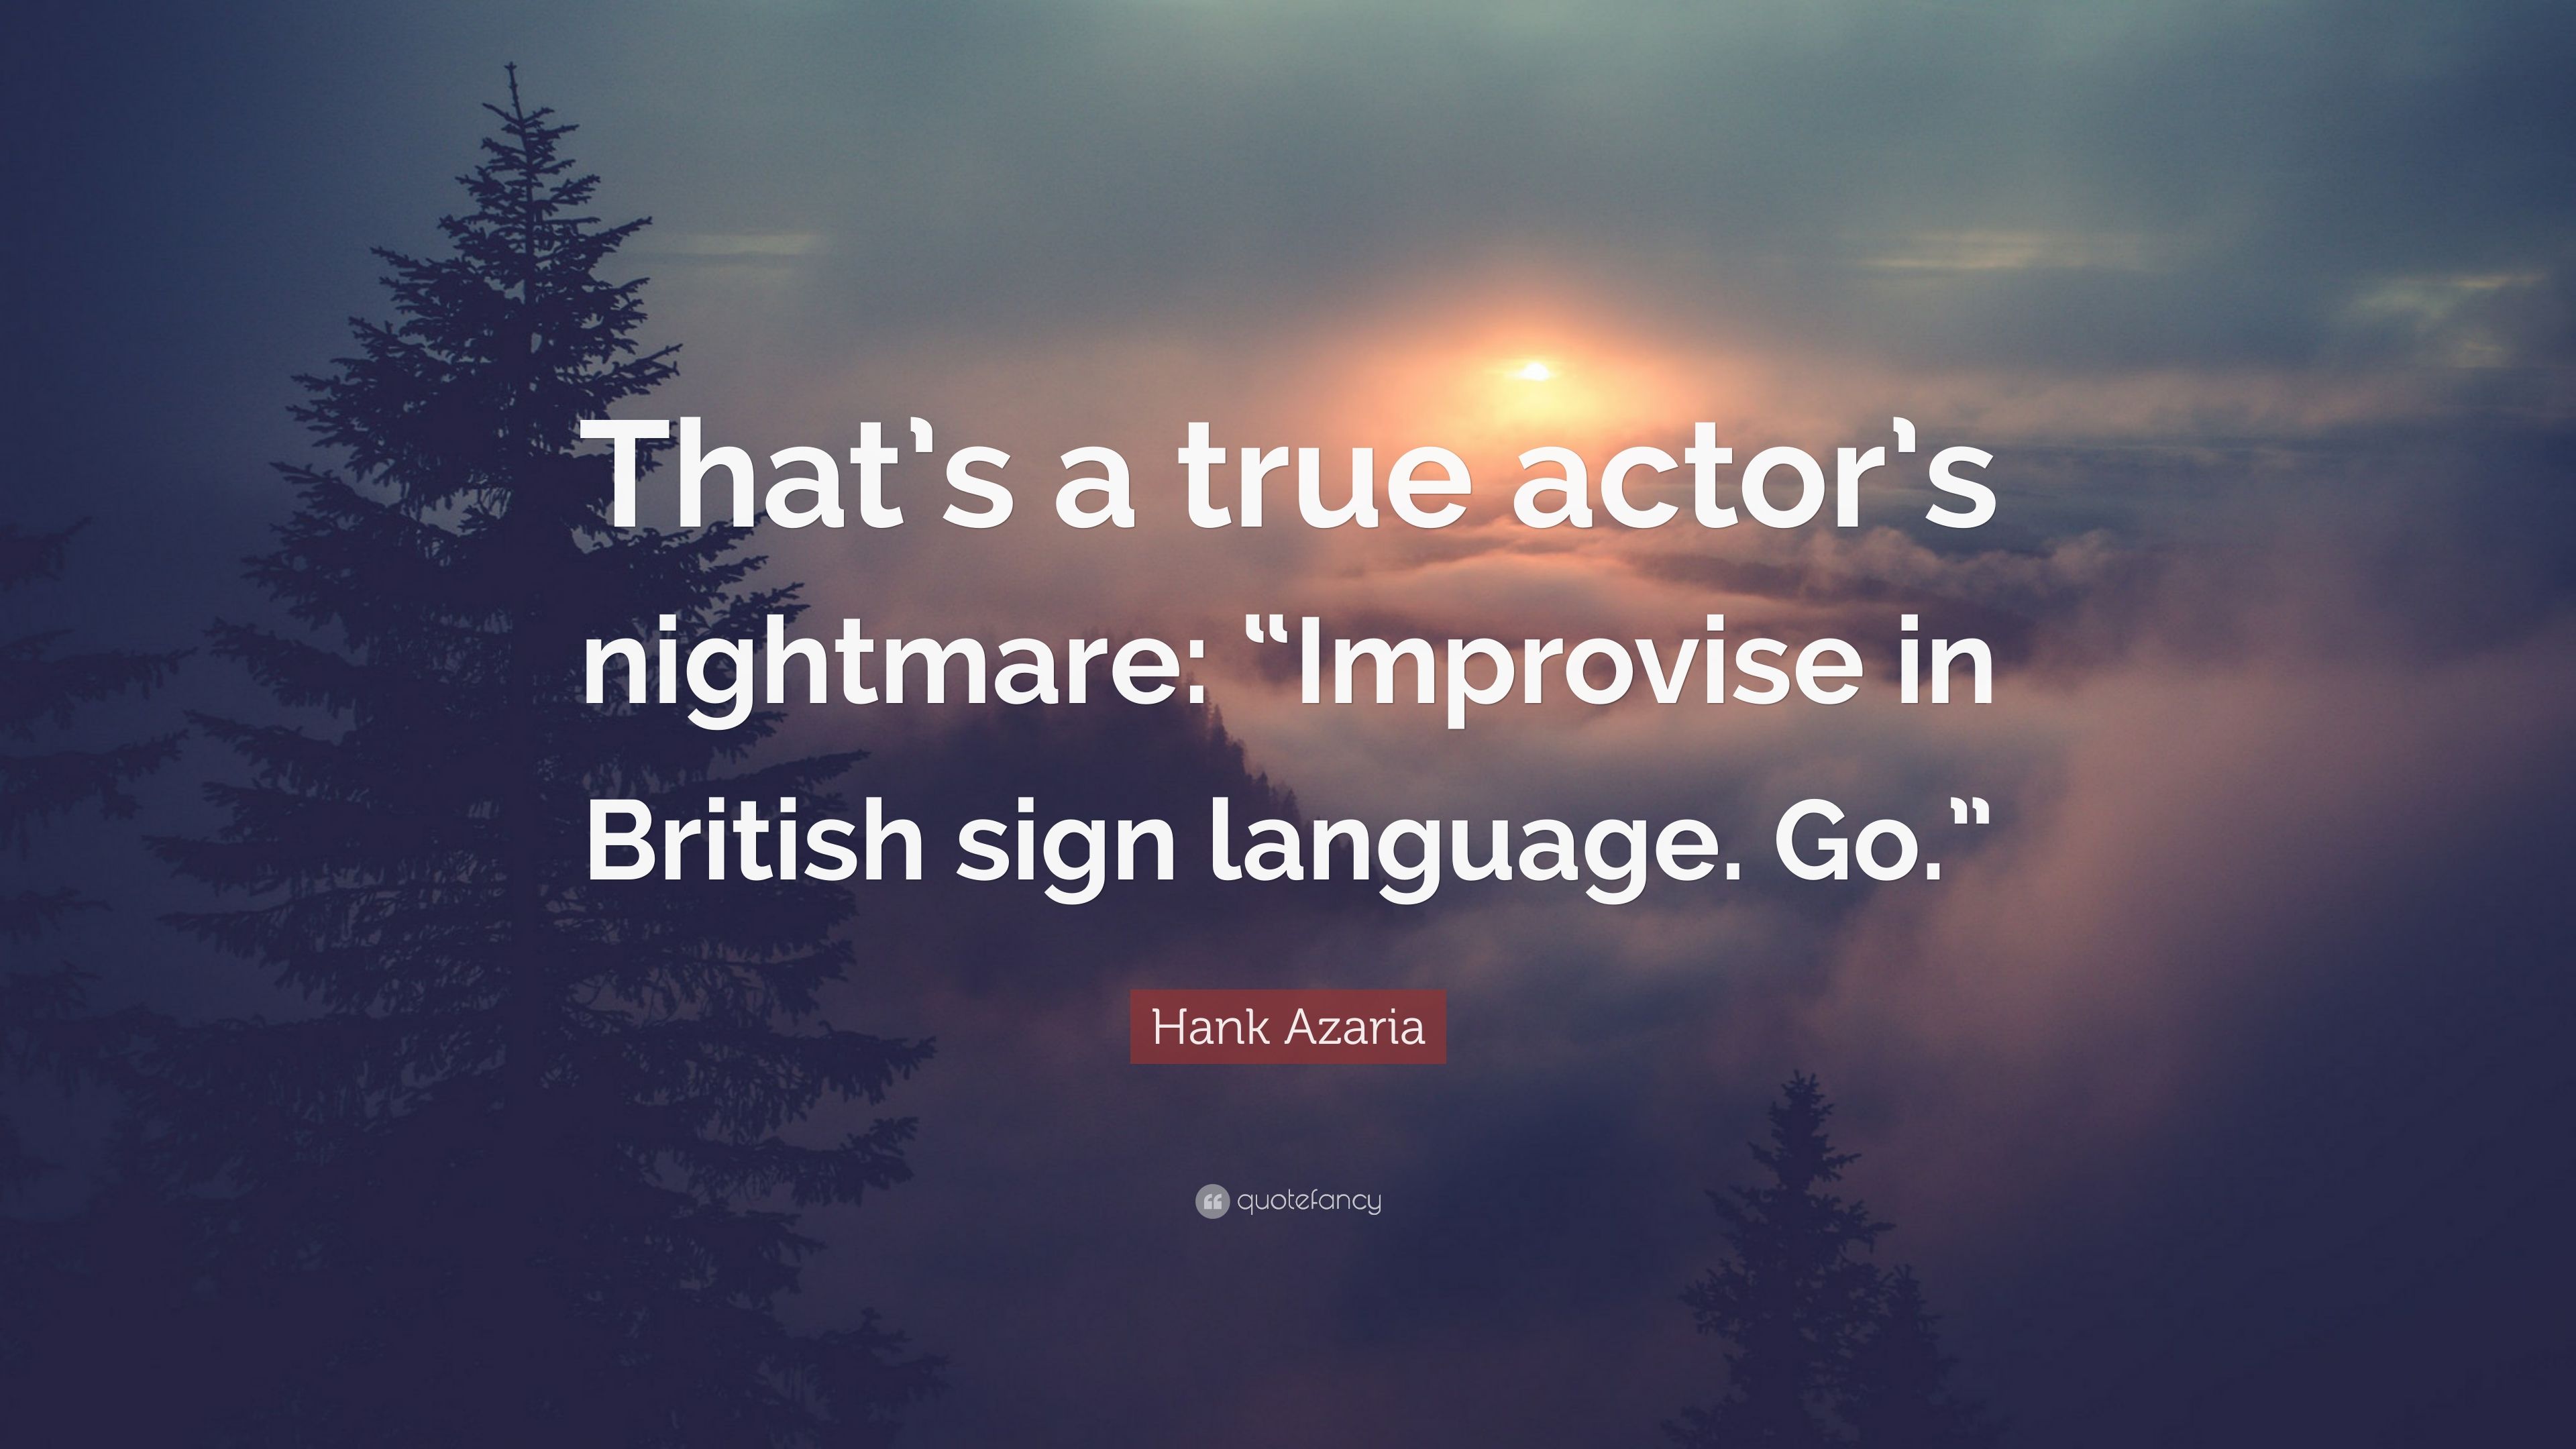 Hank Azaria Quote: “That's a true actor's nightmare: “Improvise